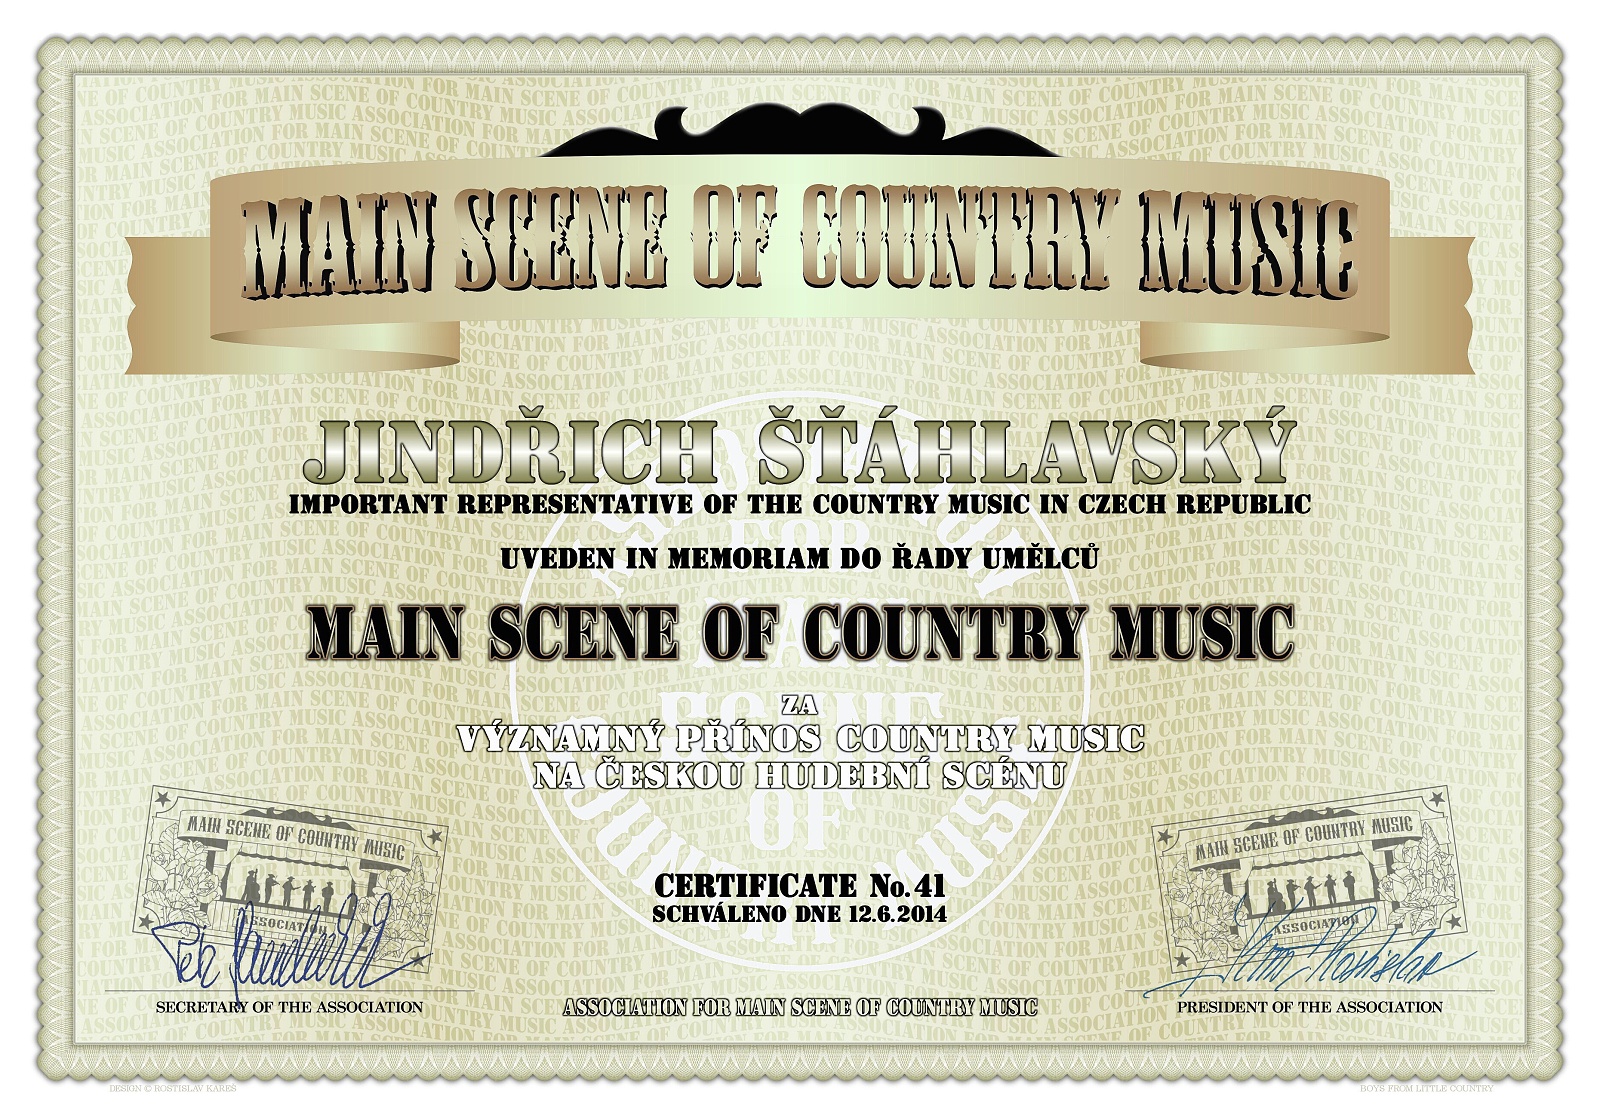 CE 41 - Main Scene of Country Music